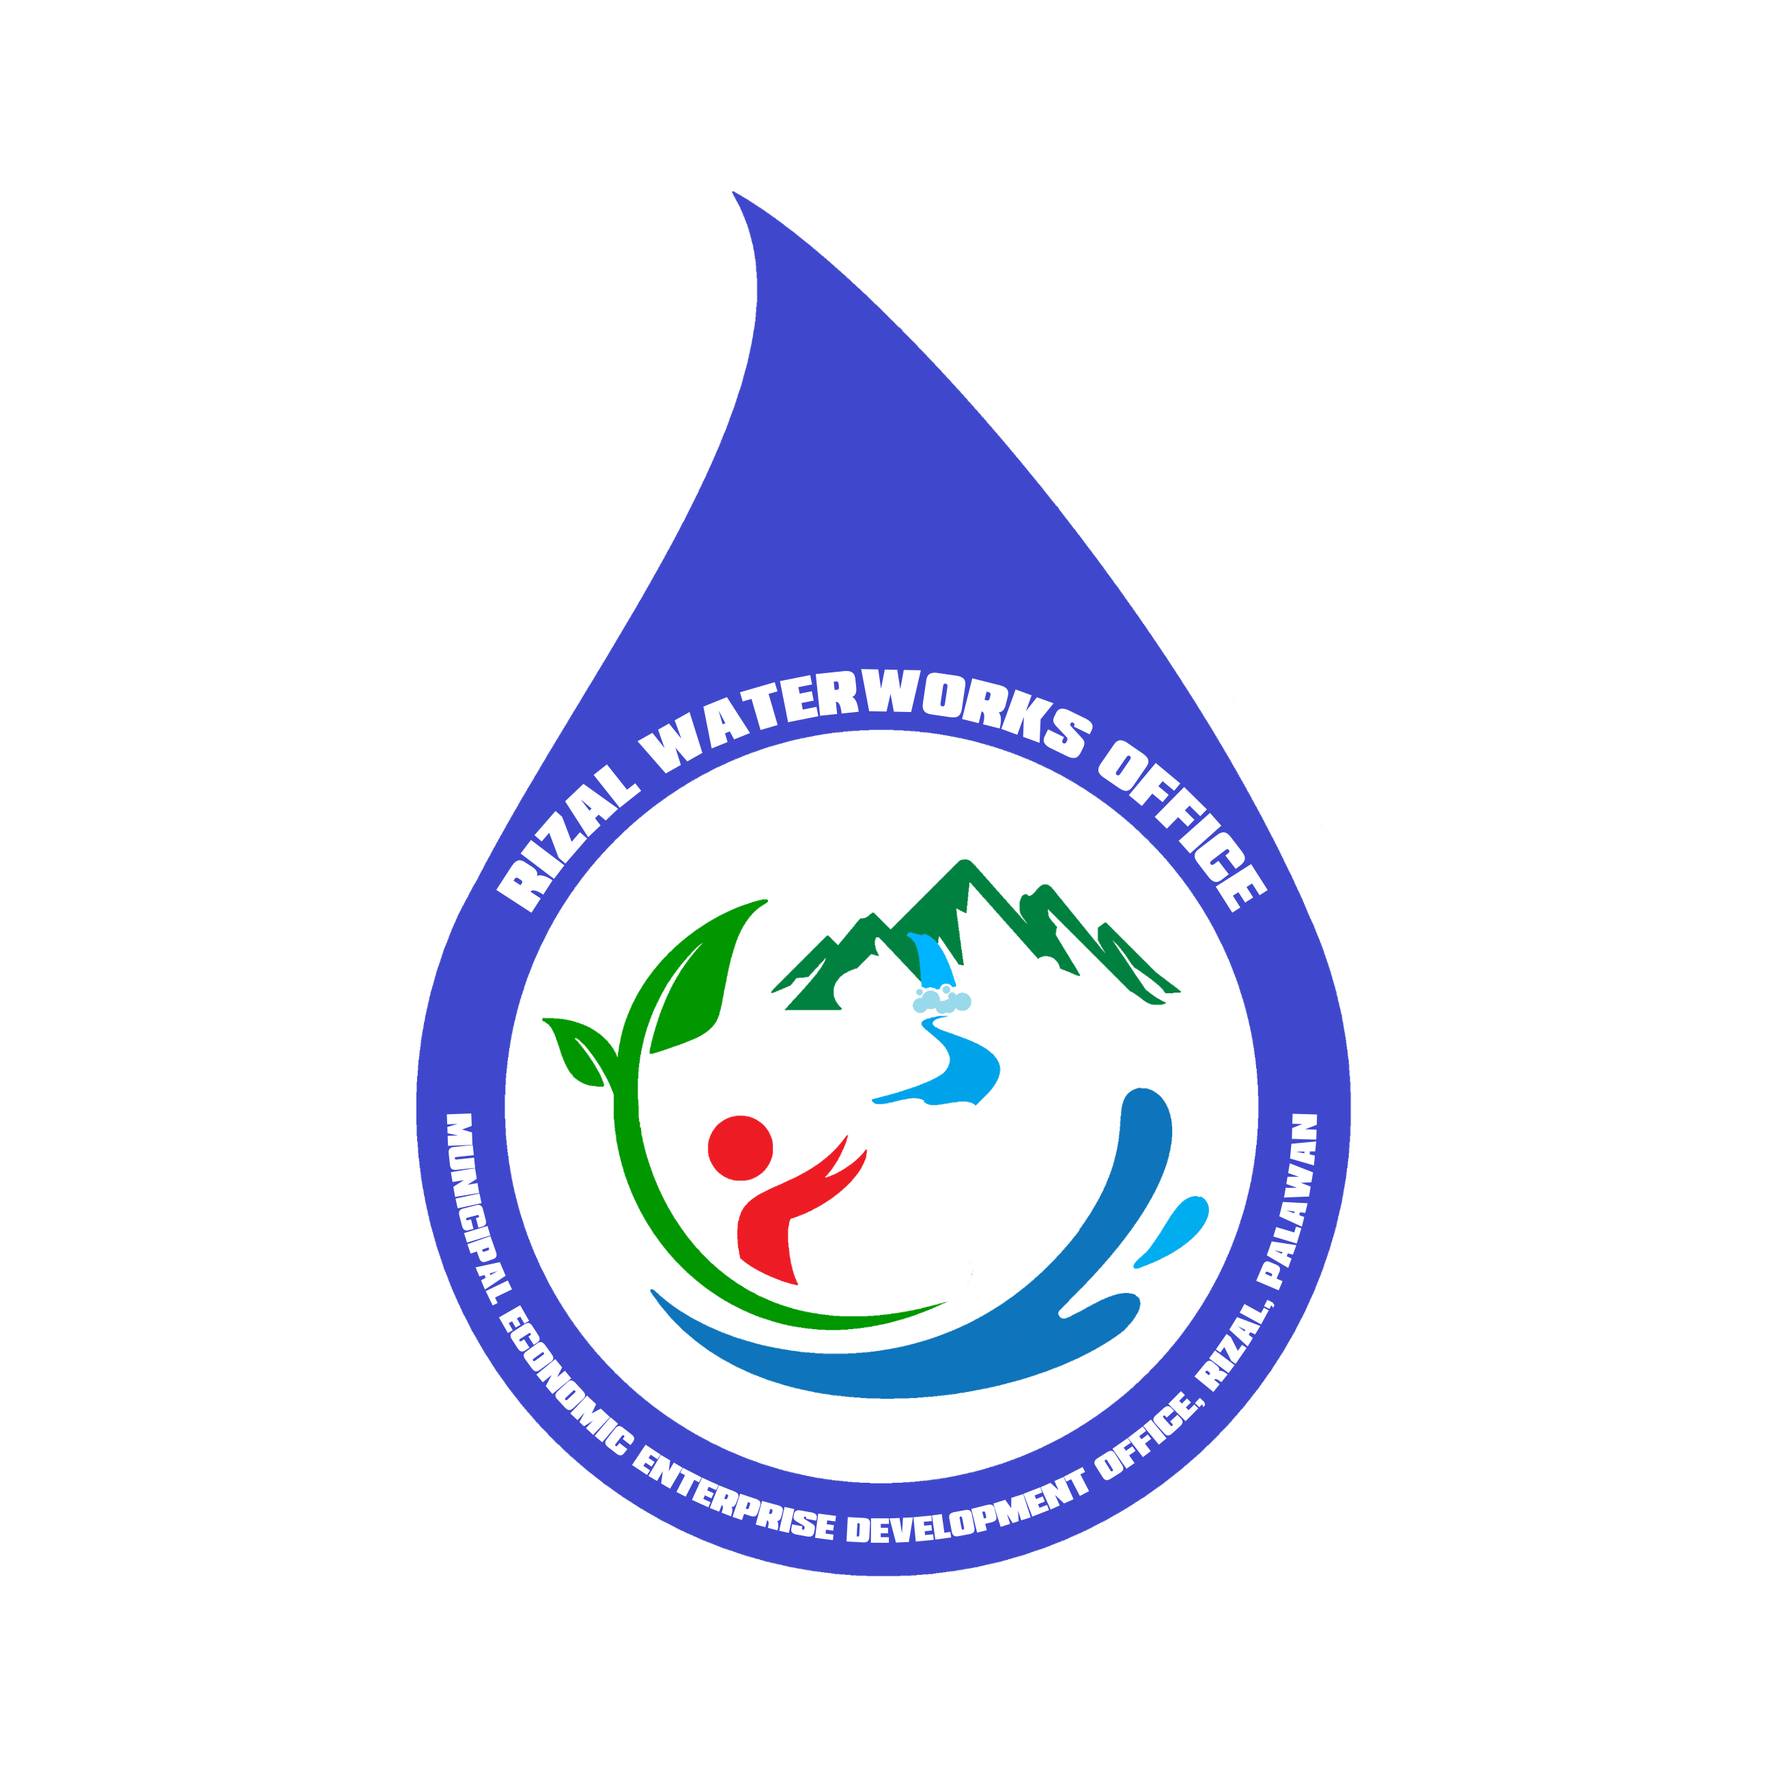 LGU RIZAL PALAWAN (RIZAL WATERWORKS OFFICE)